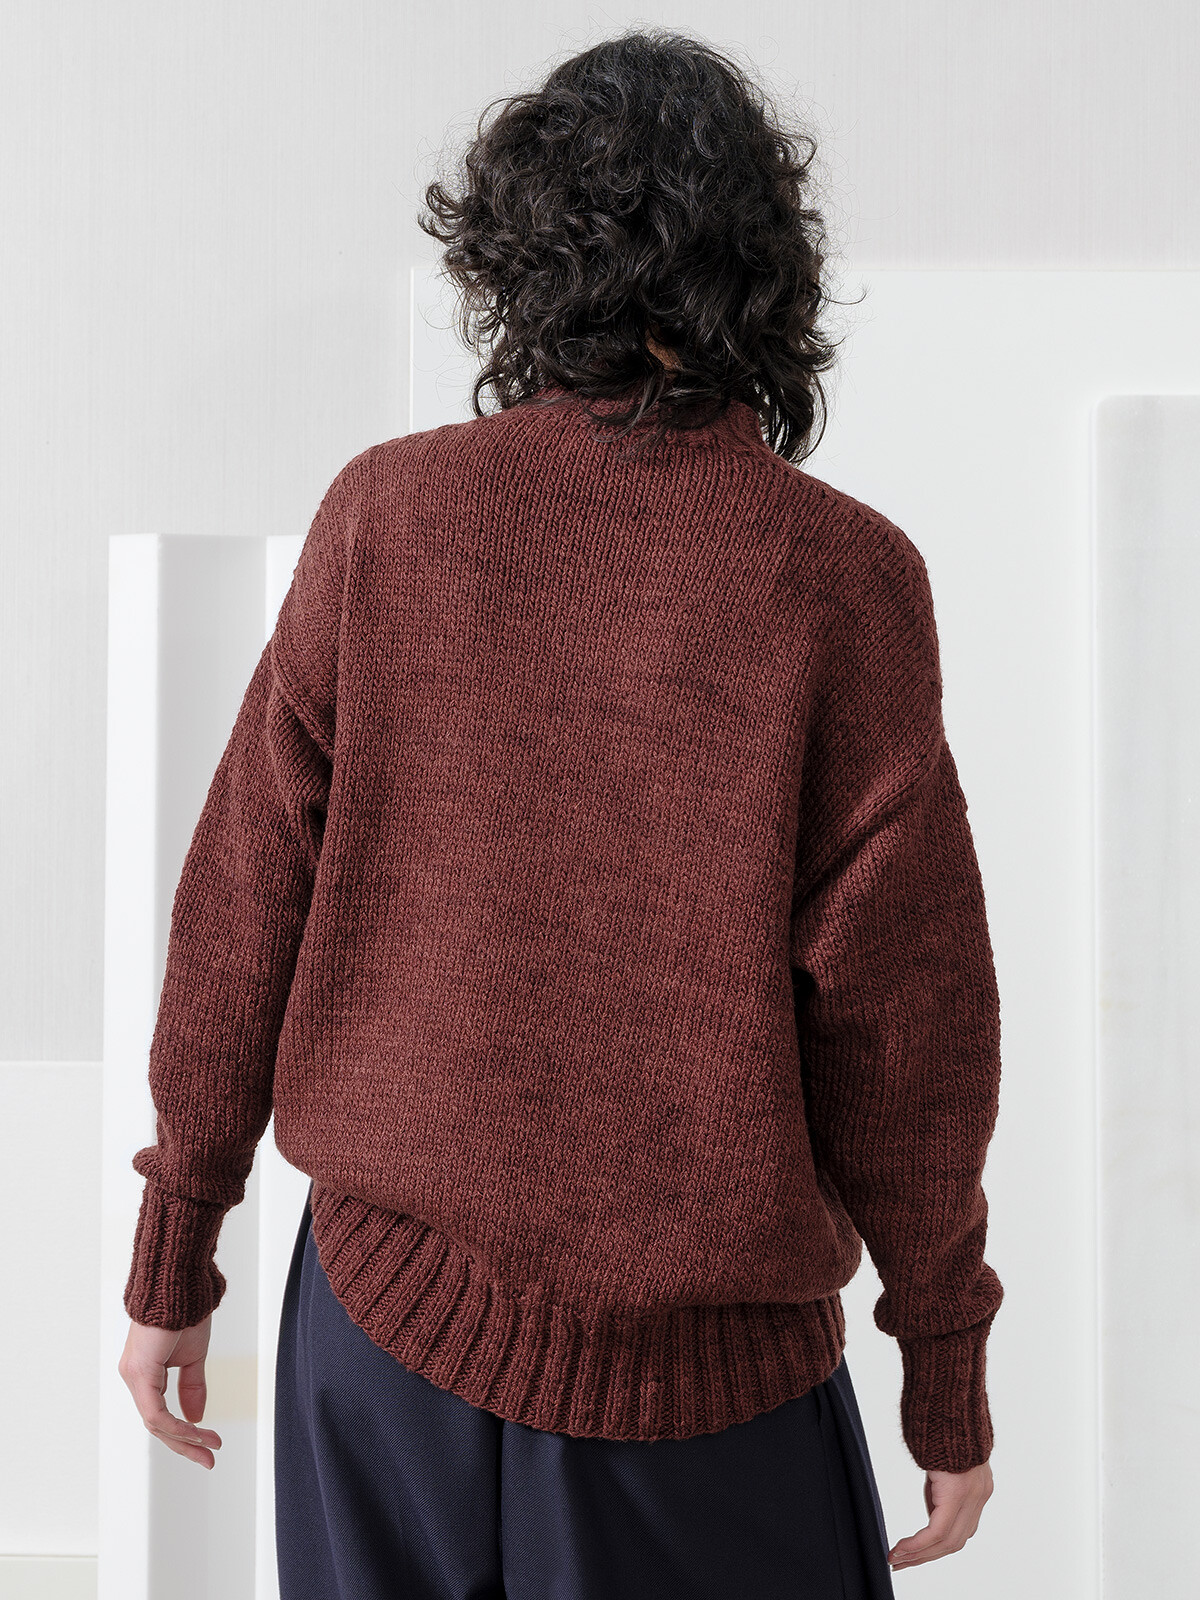 Mending sweater Image